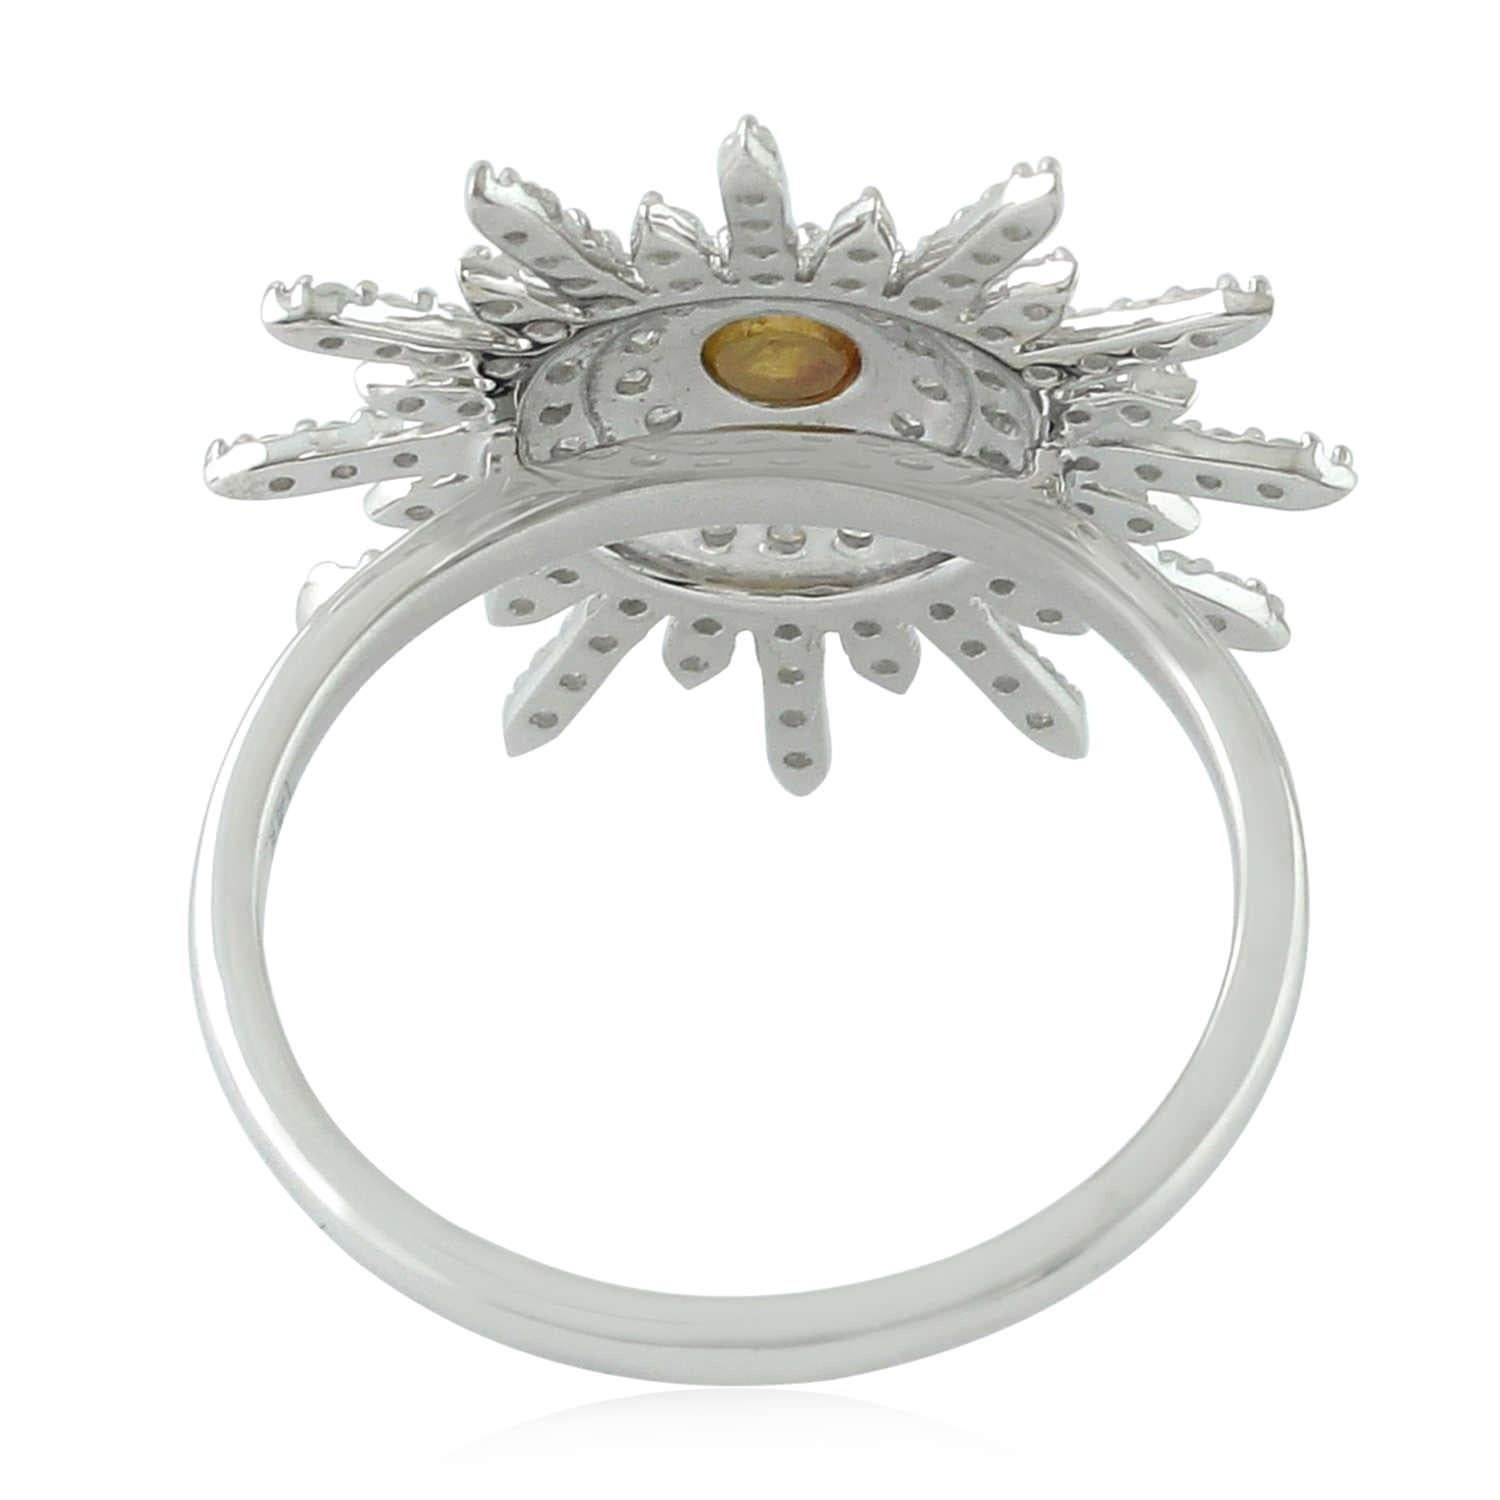 Modern 14 Karat White Gold 0.90 Carat Diamond Pave Cocktail Ring Flower Design Jewelry